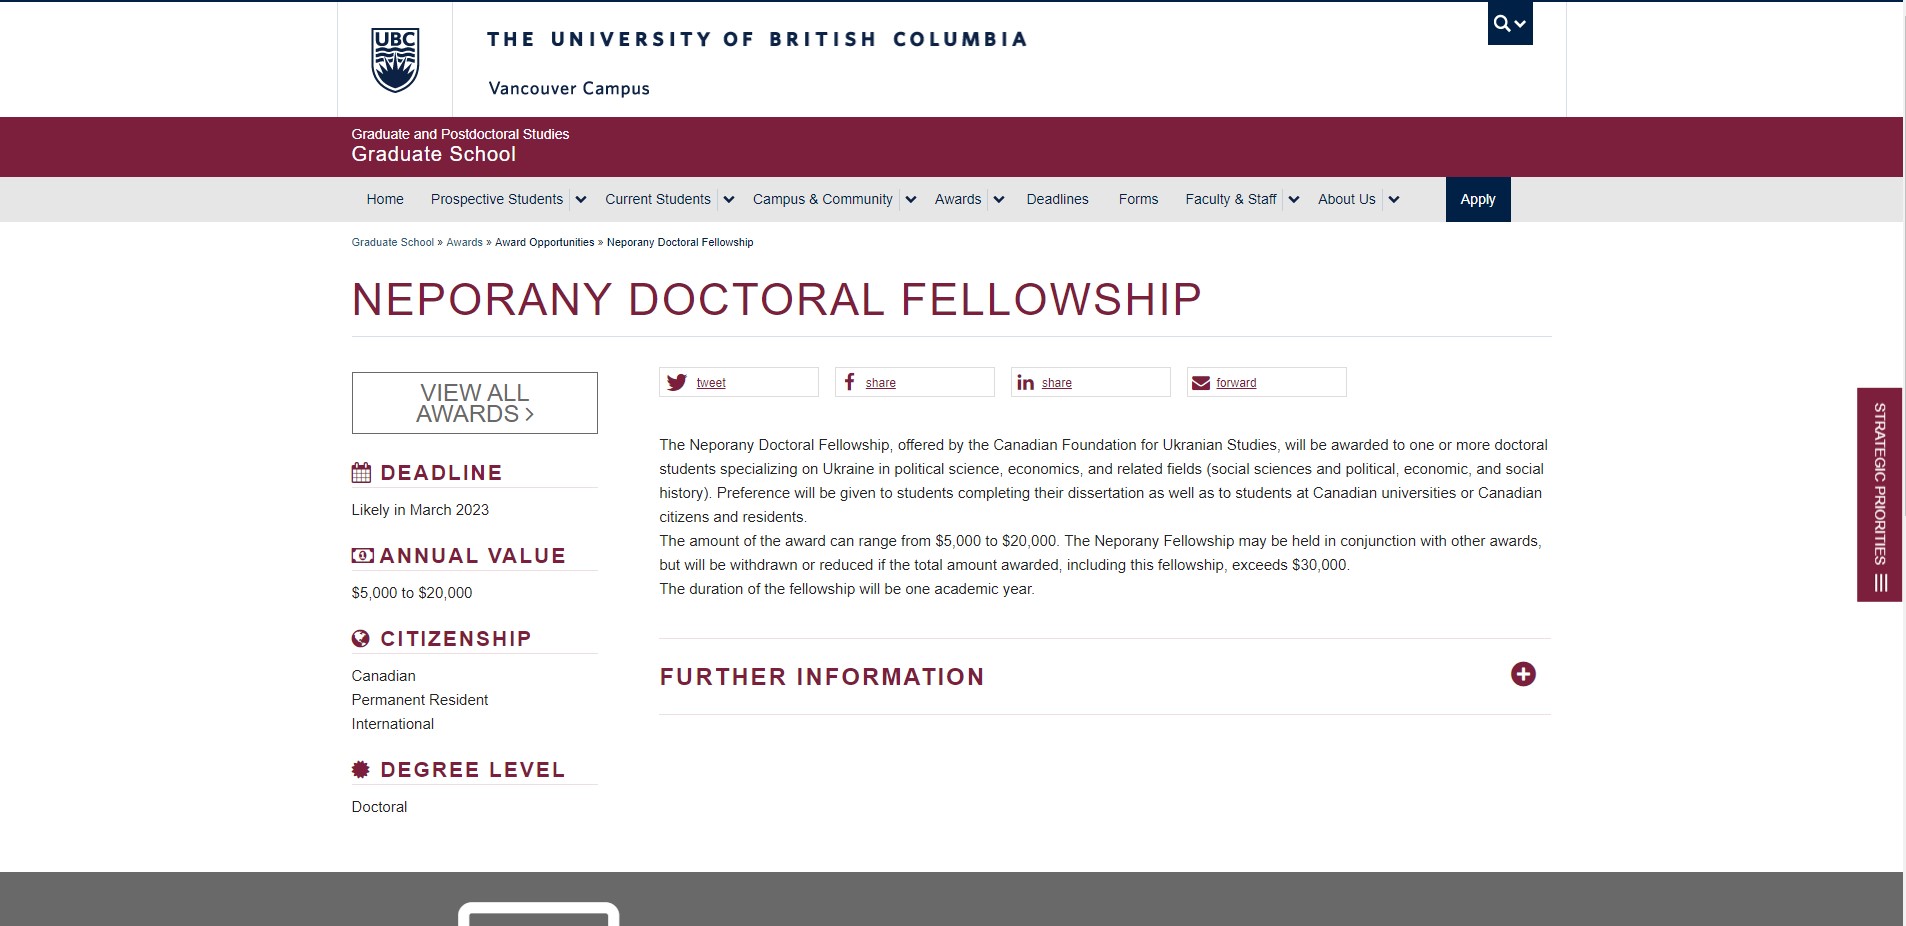 http://www.ishallwin.com/Content/ScholarshipImages/university of british columbia scholarship.jpg